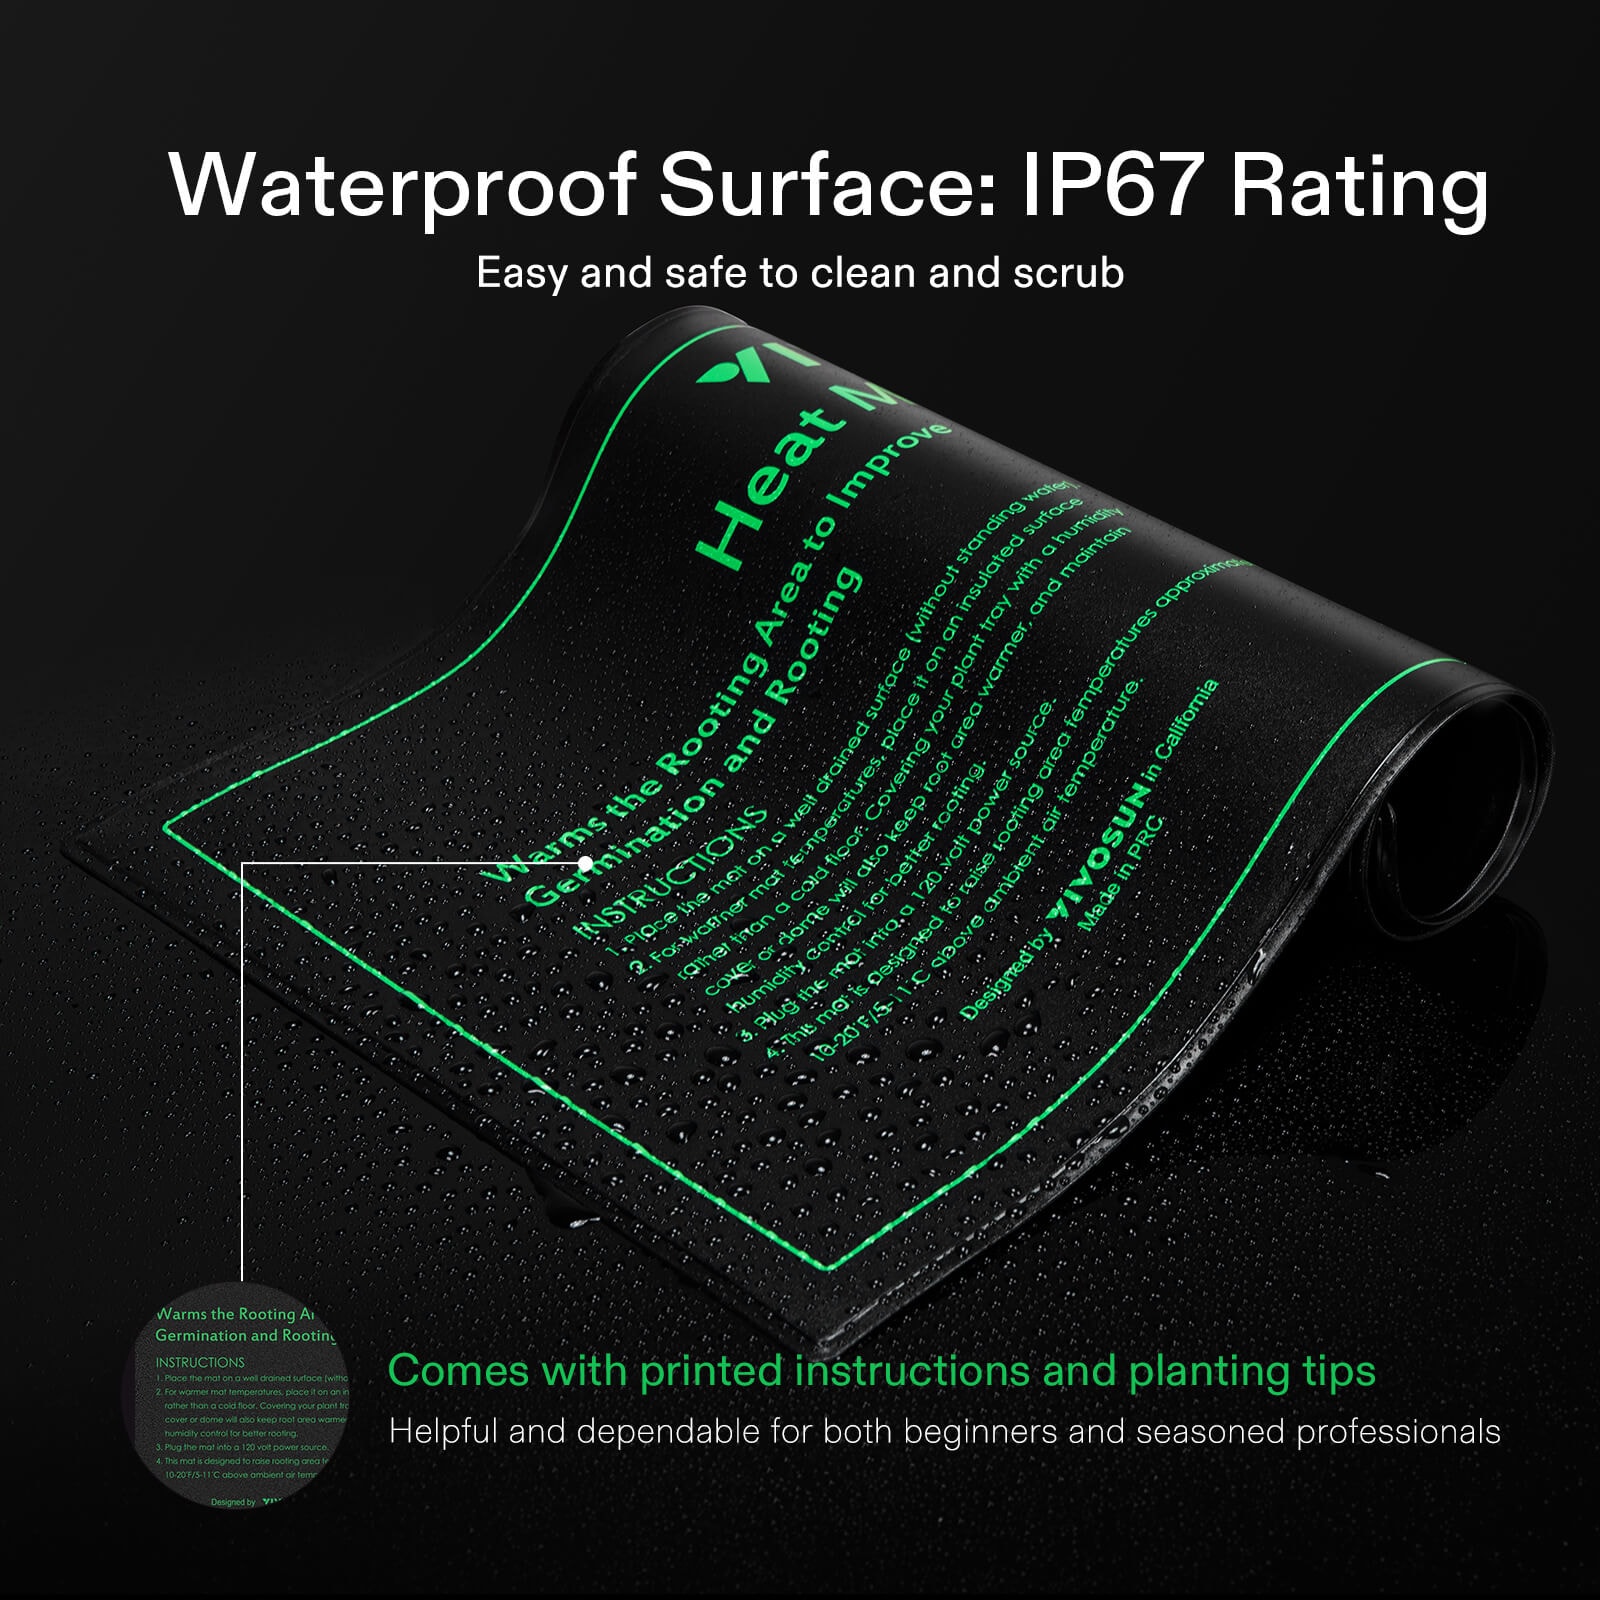 Durable Seedling Heat Mat Warm Hydroponic Heating Pad Waterproof 10*20 -  BN-LINK